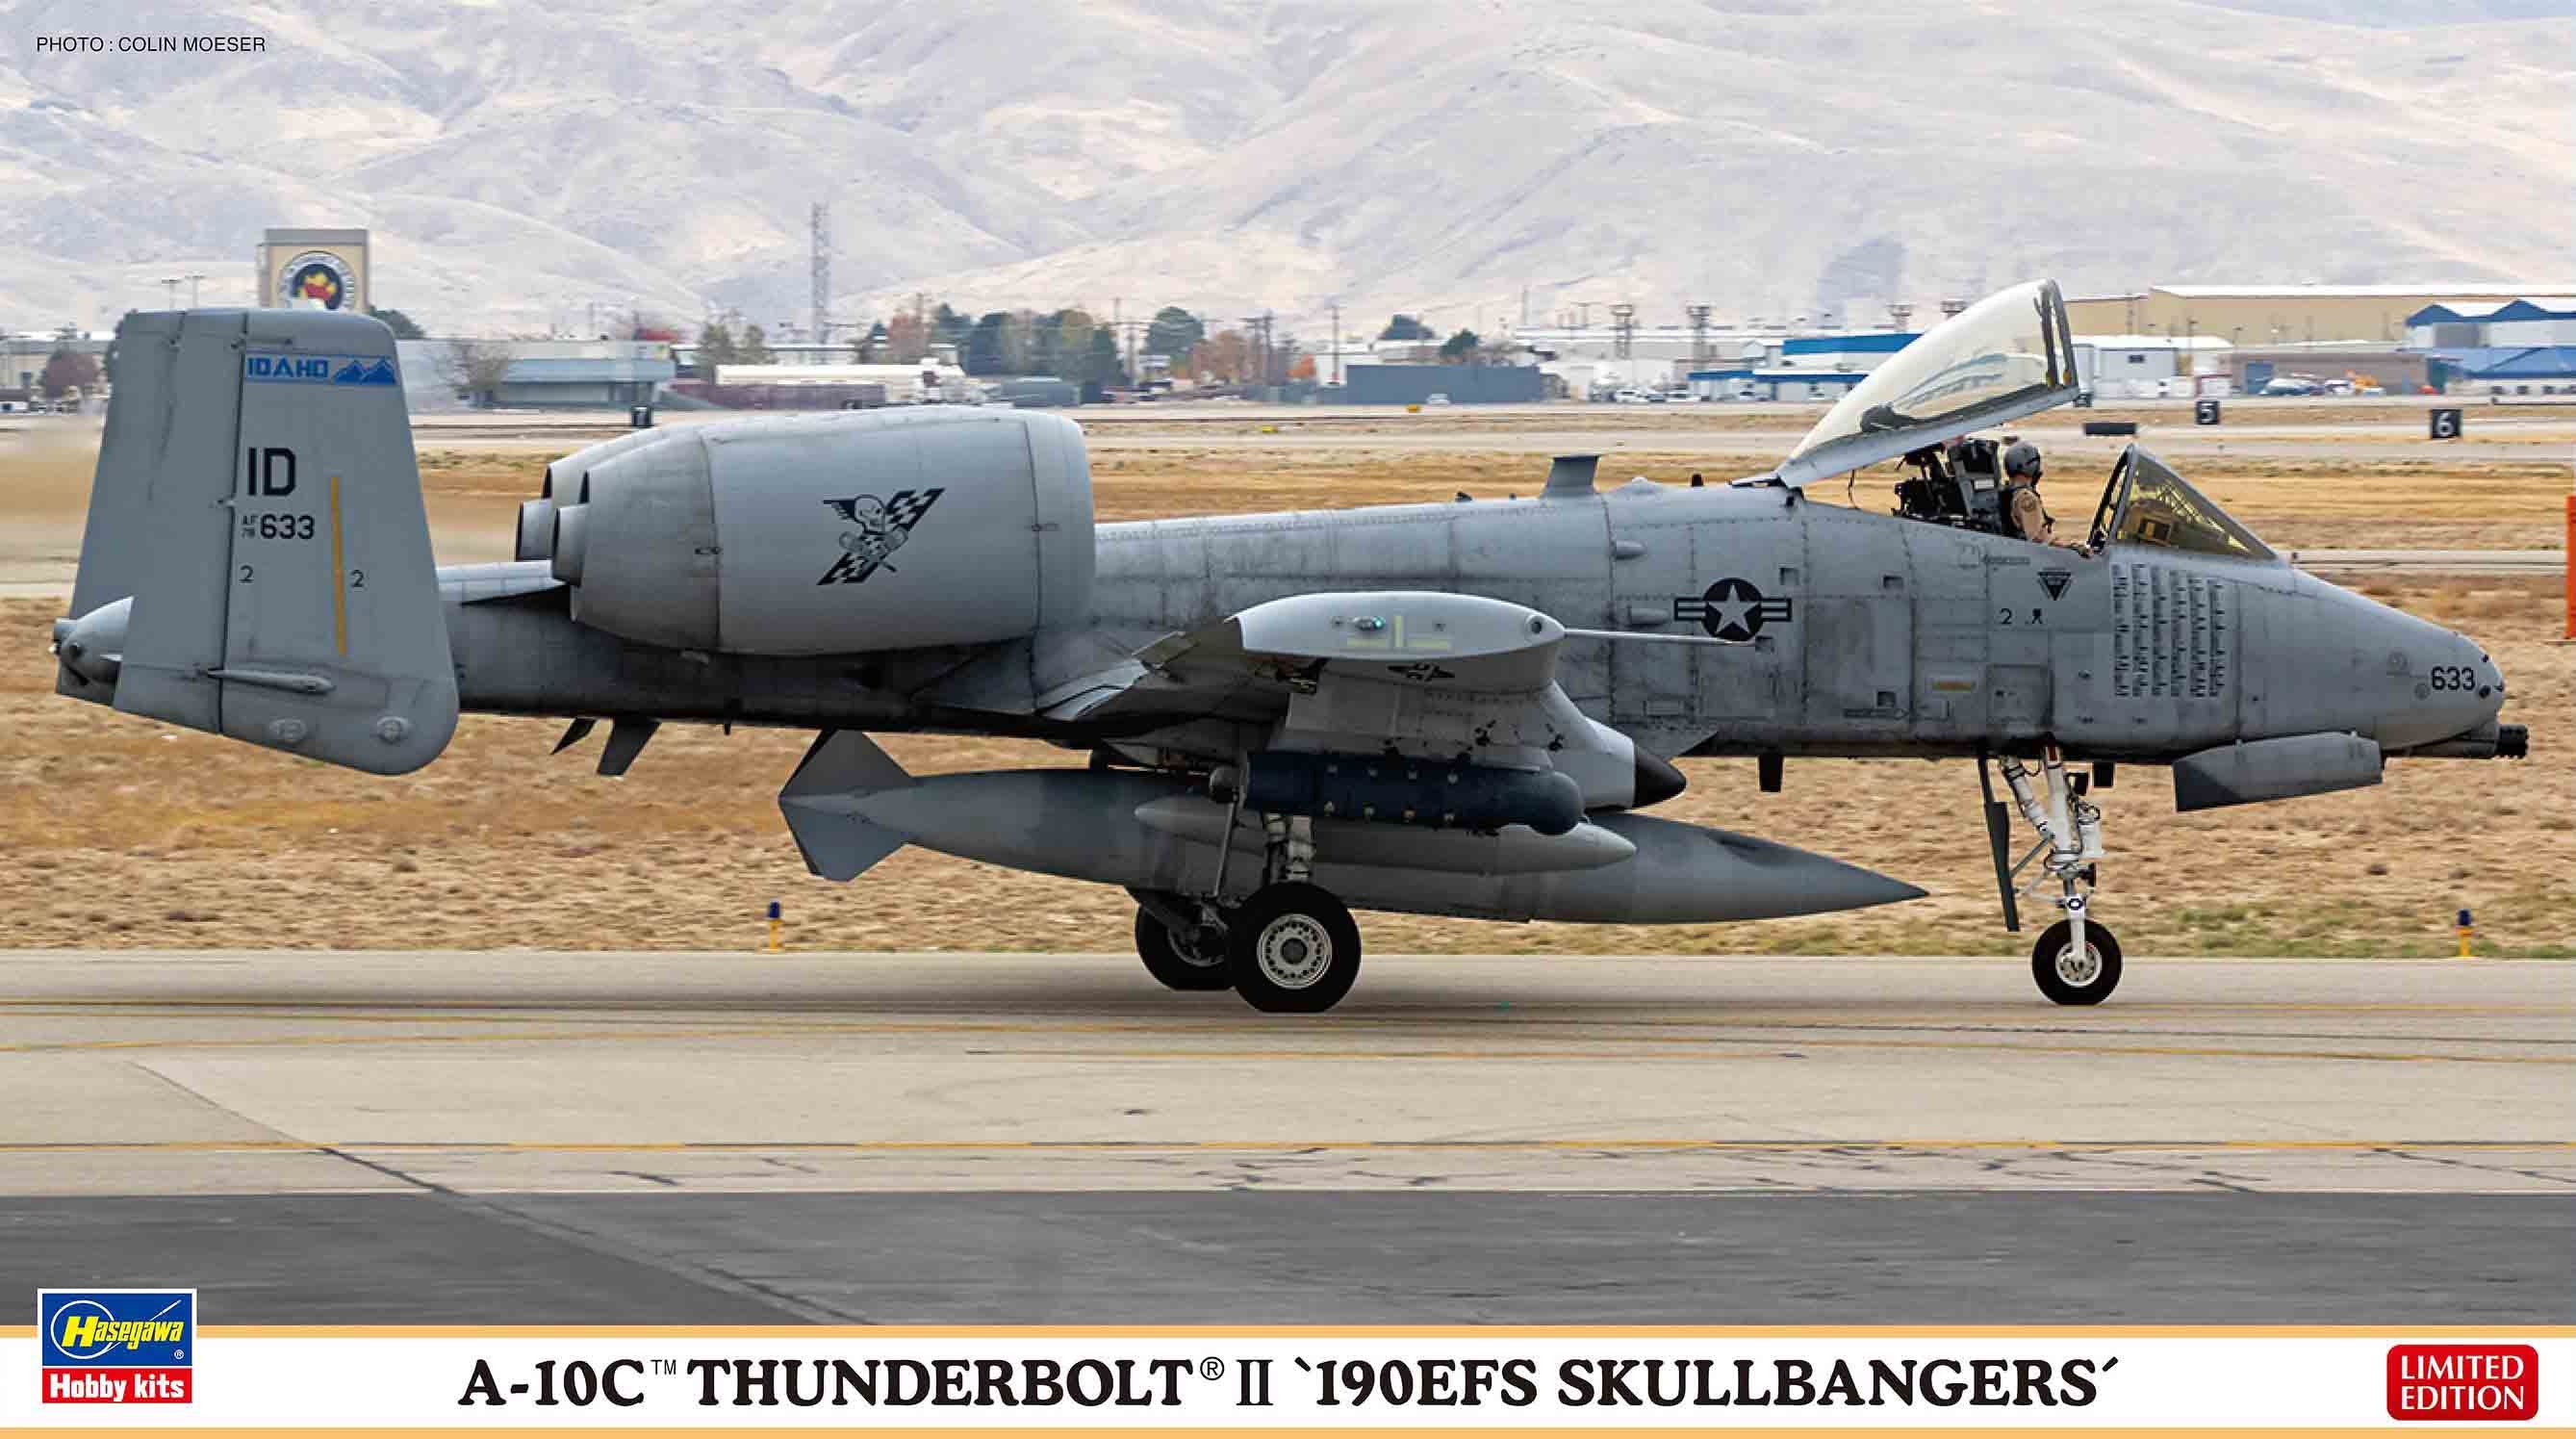 A-10C Thunderbolt II "190EFS SKULLBANGERS" 1/72 #02451 by Hasegawa